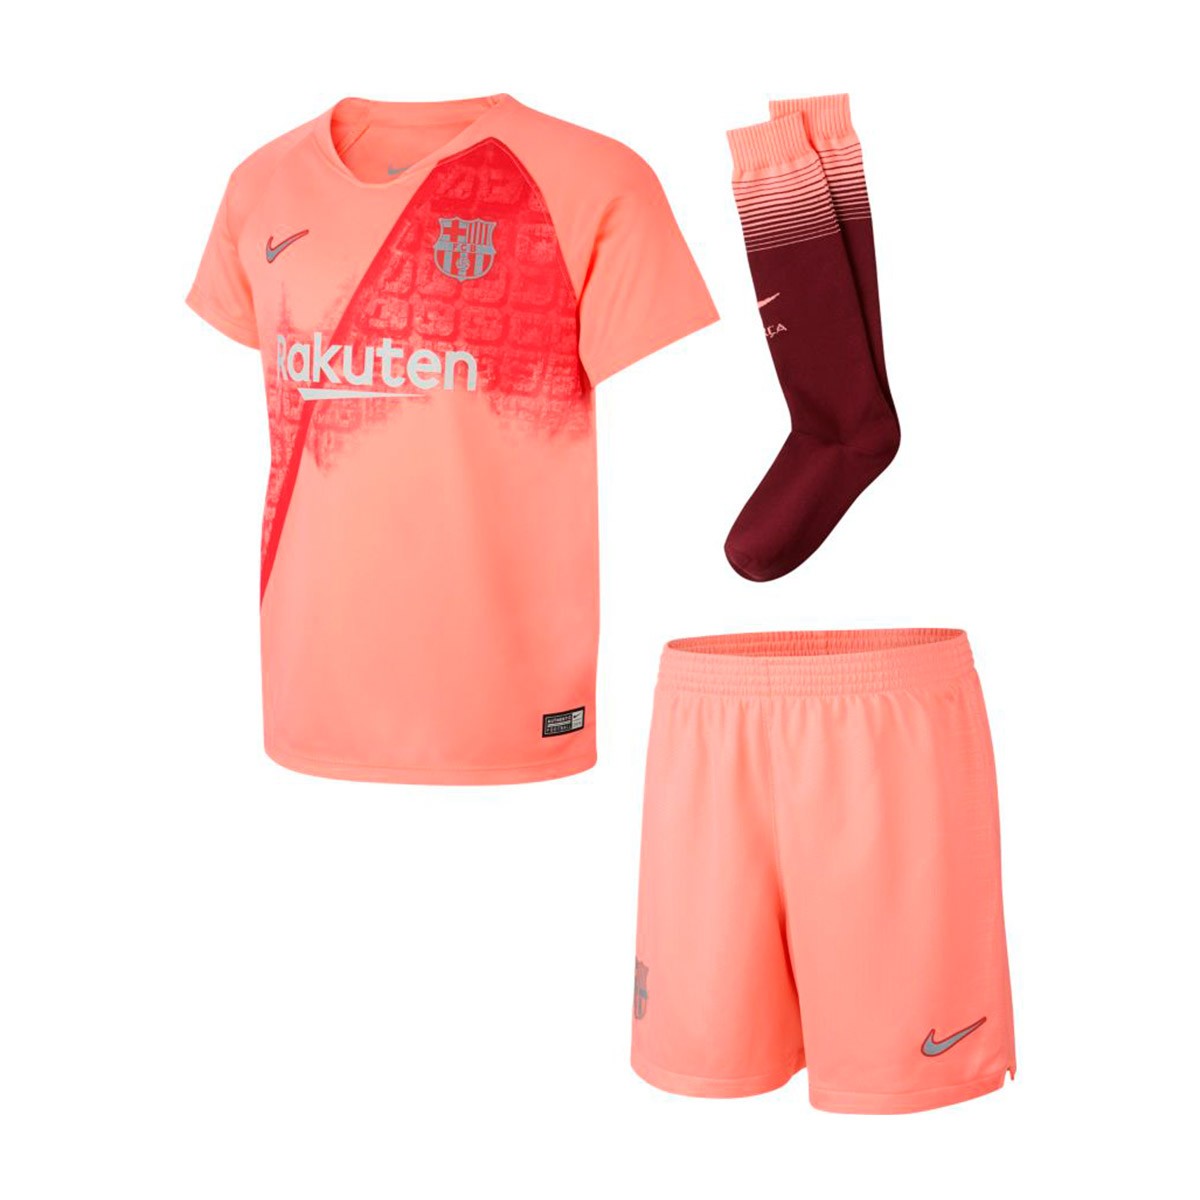 barcelona jersey 2019 pink